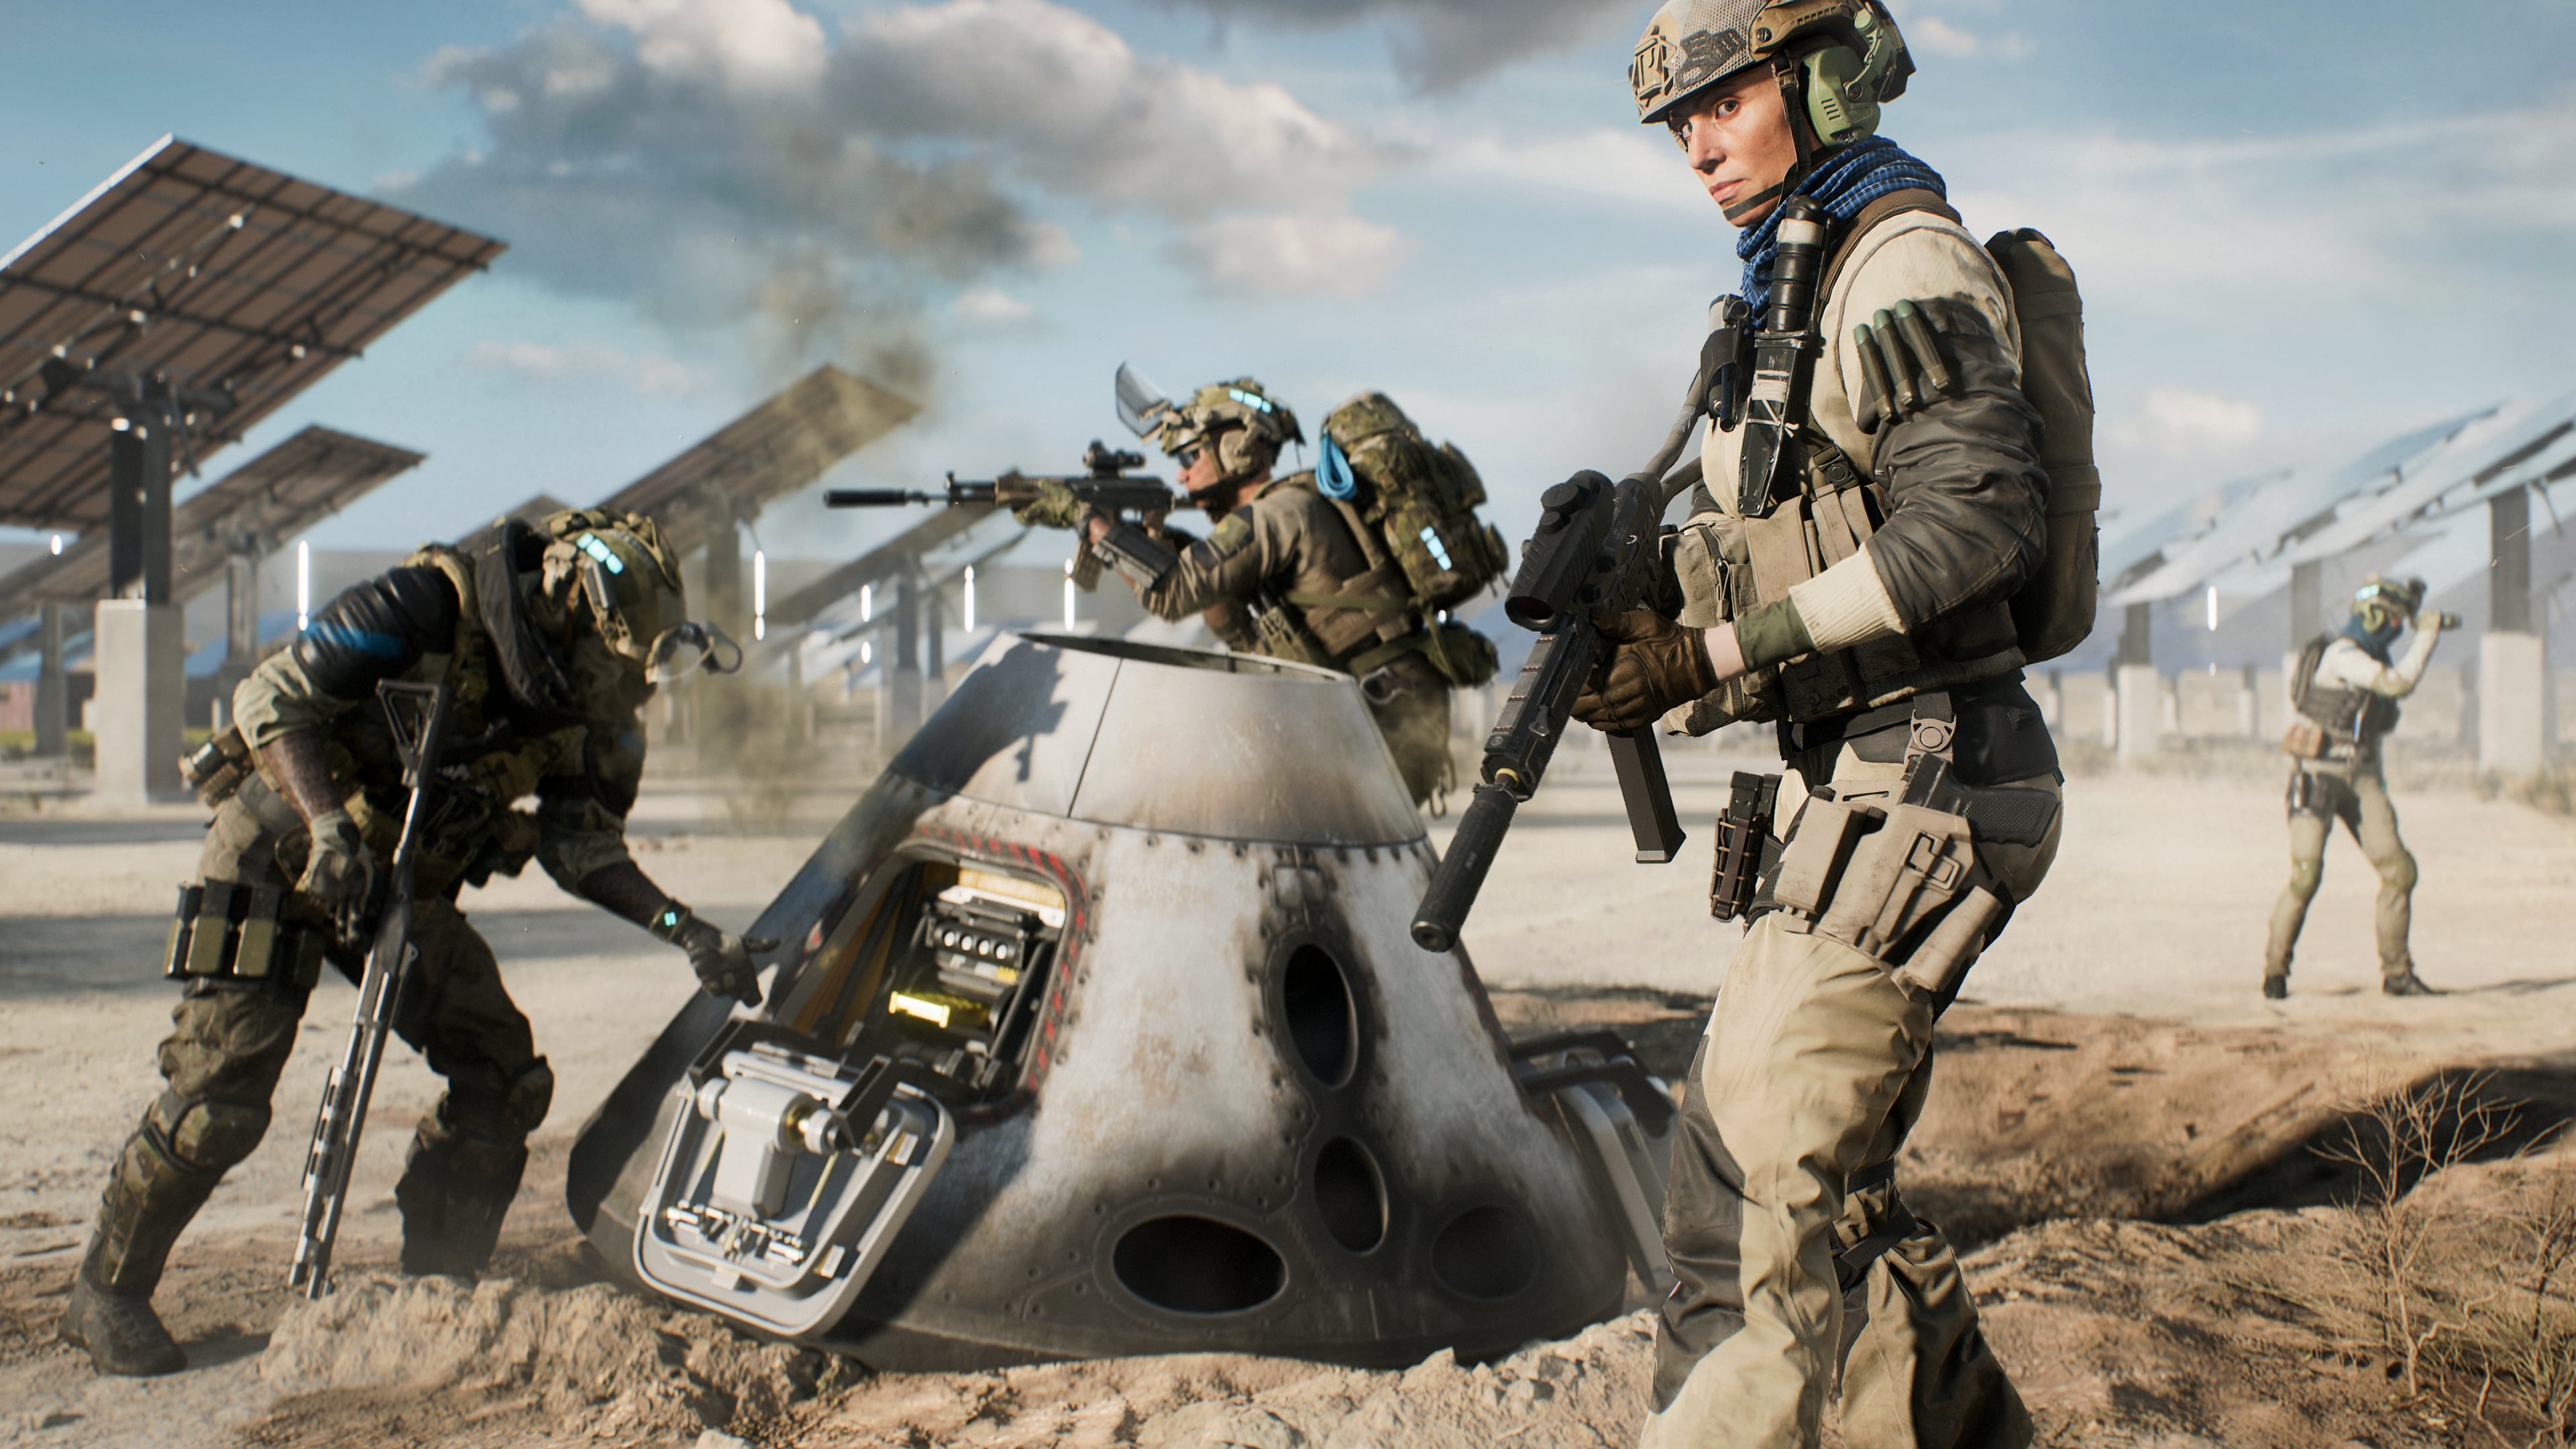 Battlefield 2042's fourth season, Eleventh Hour, brings a new map